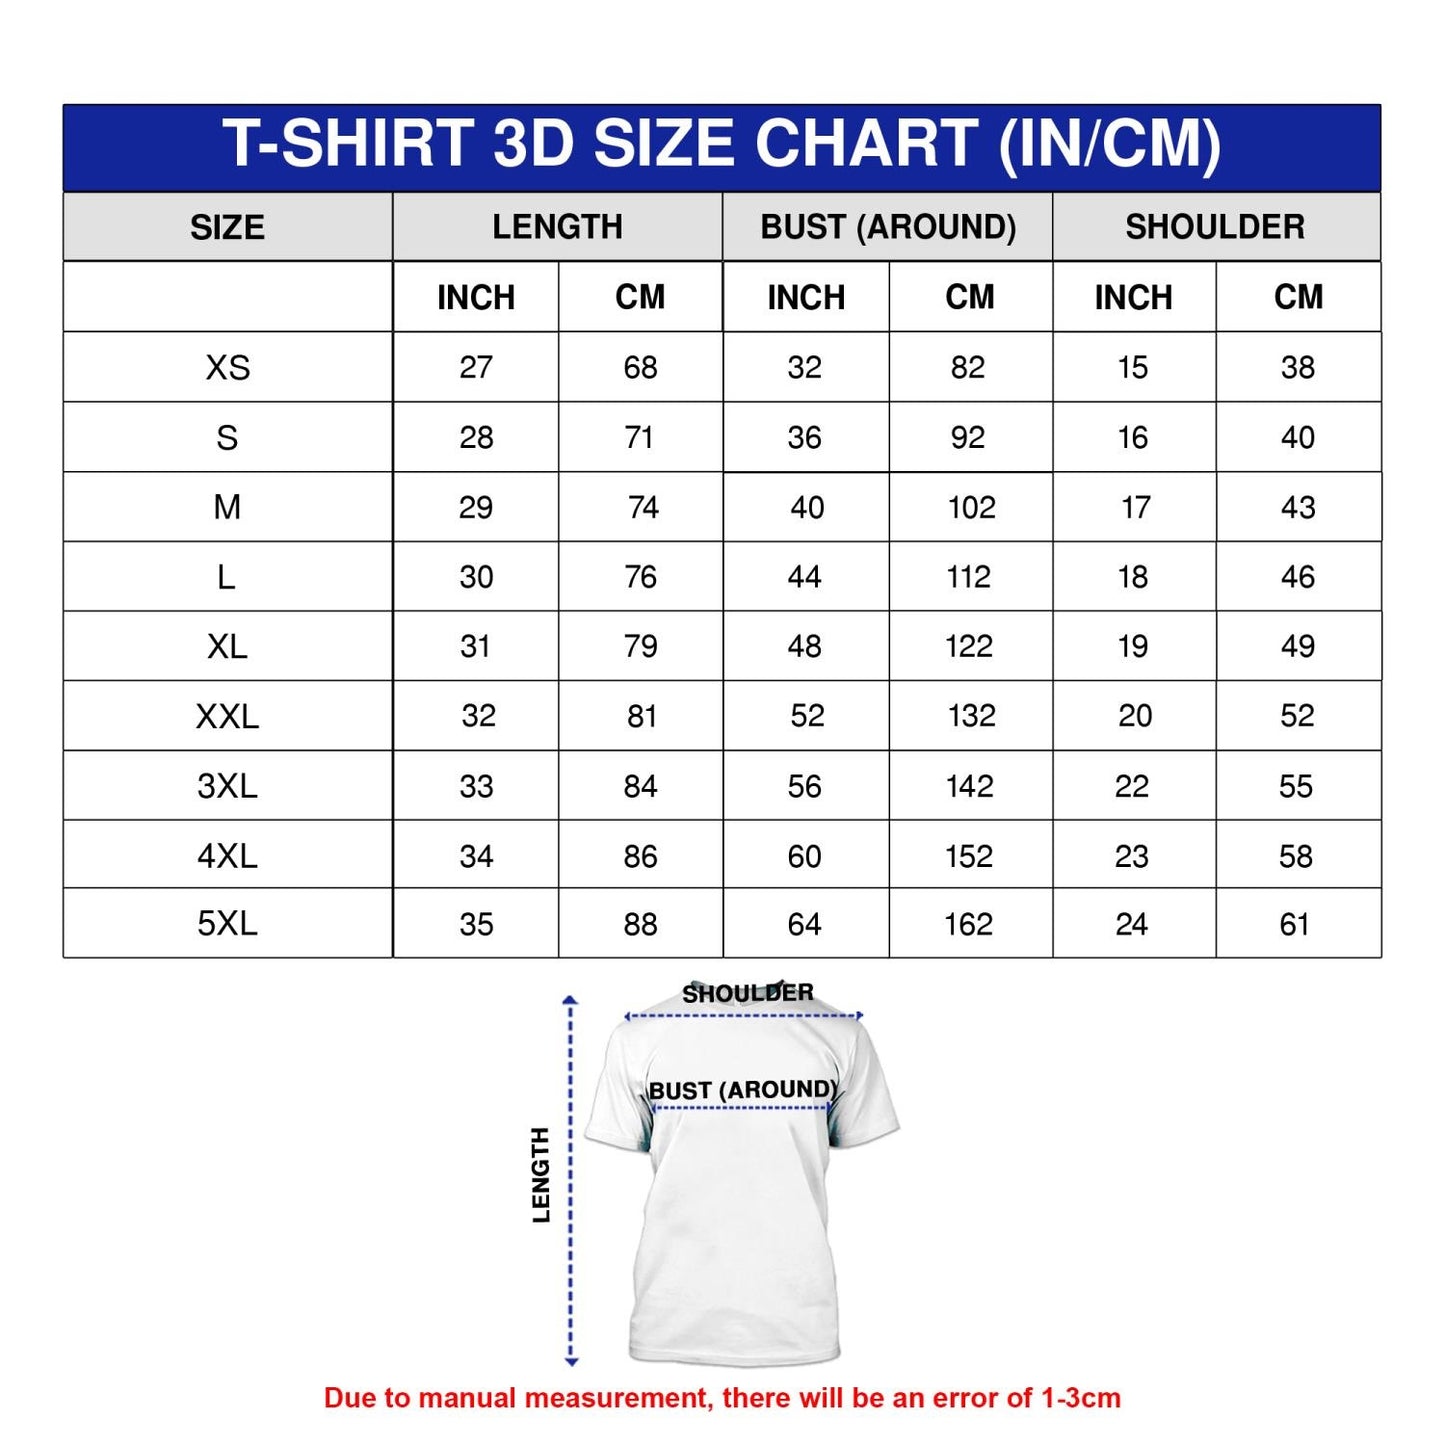 Christian Jesus Dna Test Blue And Black Color Jesus Unisex Shirts - Christian 3d Shirts For Men Women